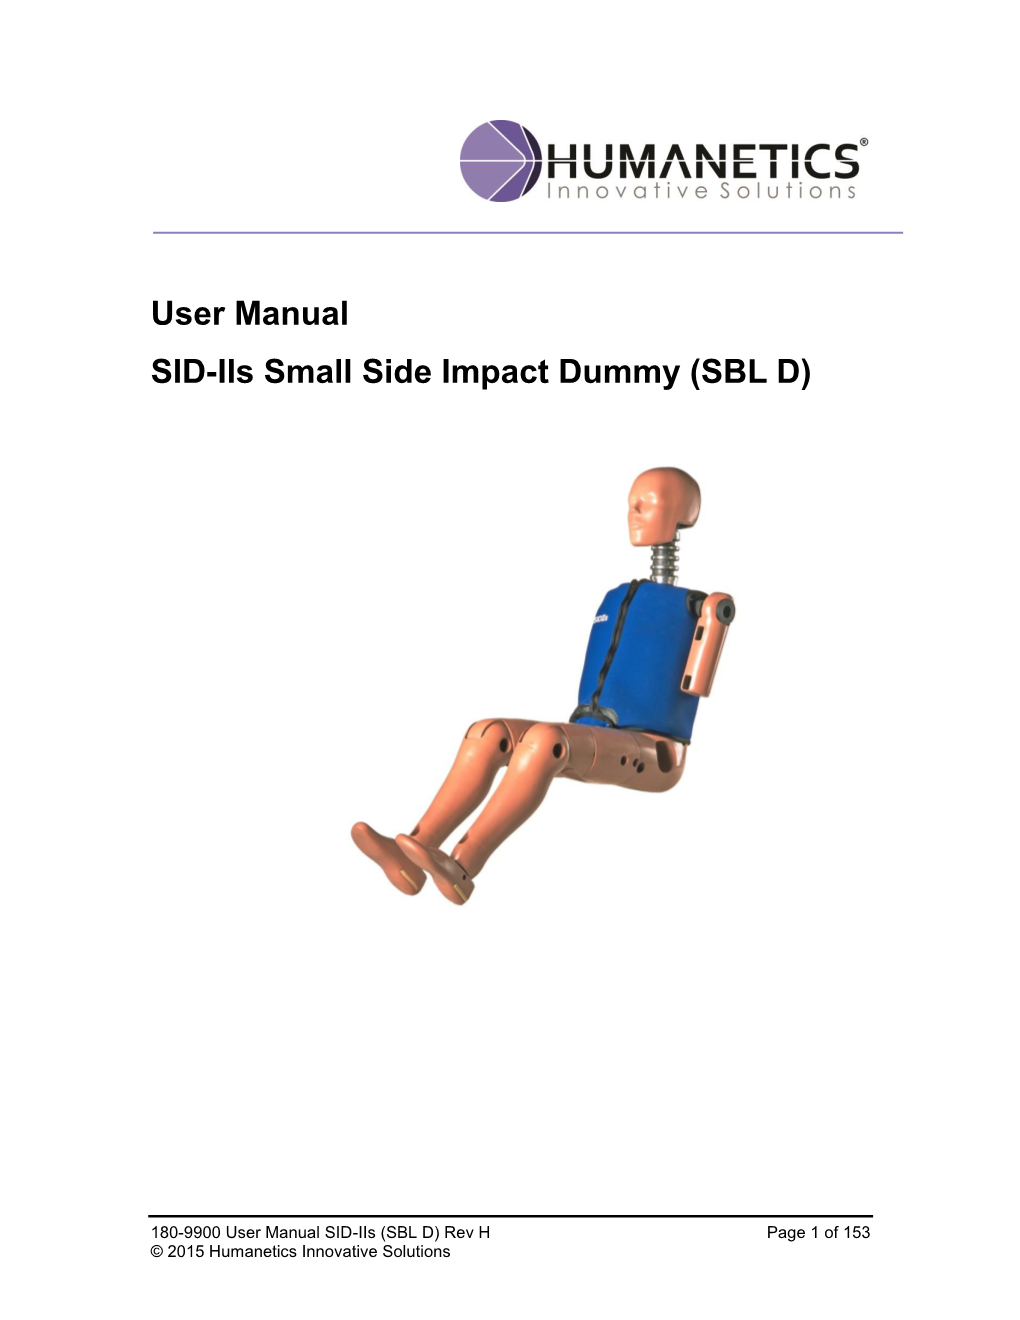 User Manual SID-Iis Small Side Impact Dummy (SBL D)